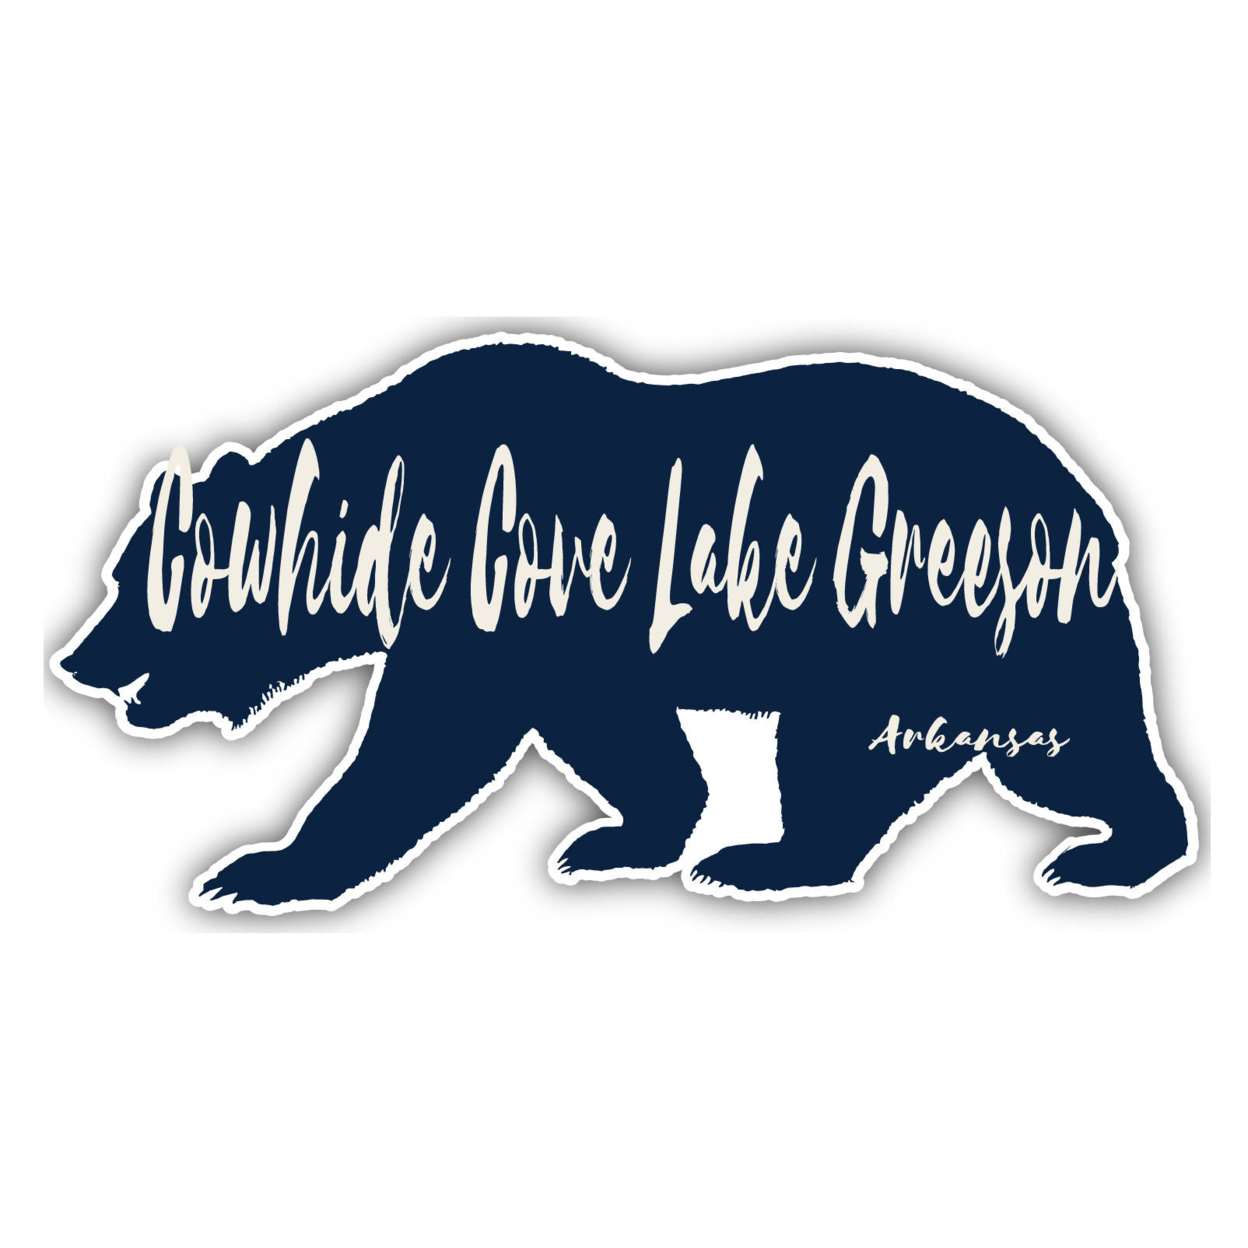 Cowhide Cove Lake Greeson Arkansas Souvenir Decorative Stickers (Choose Theme And Size) - 4-Pack, 4-Inch, Bear